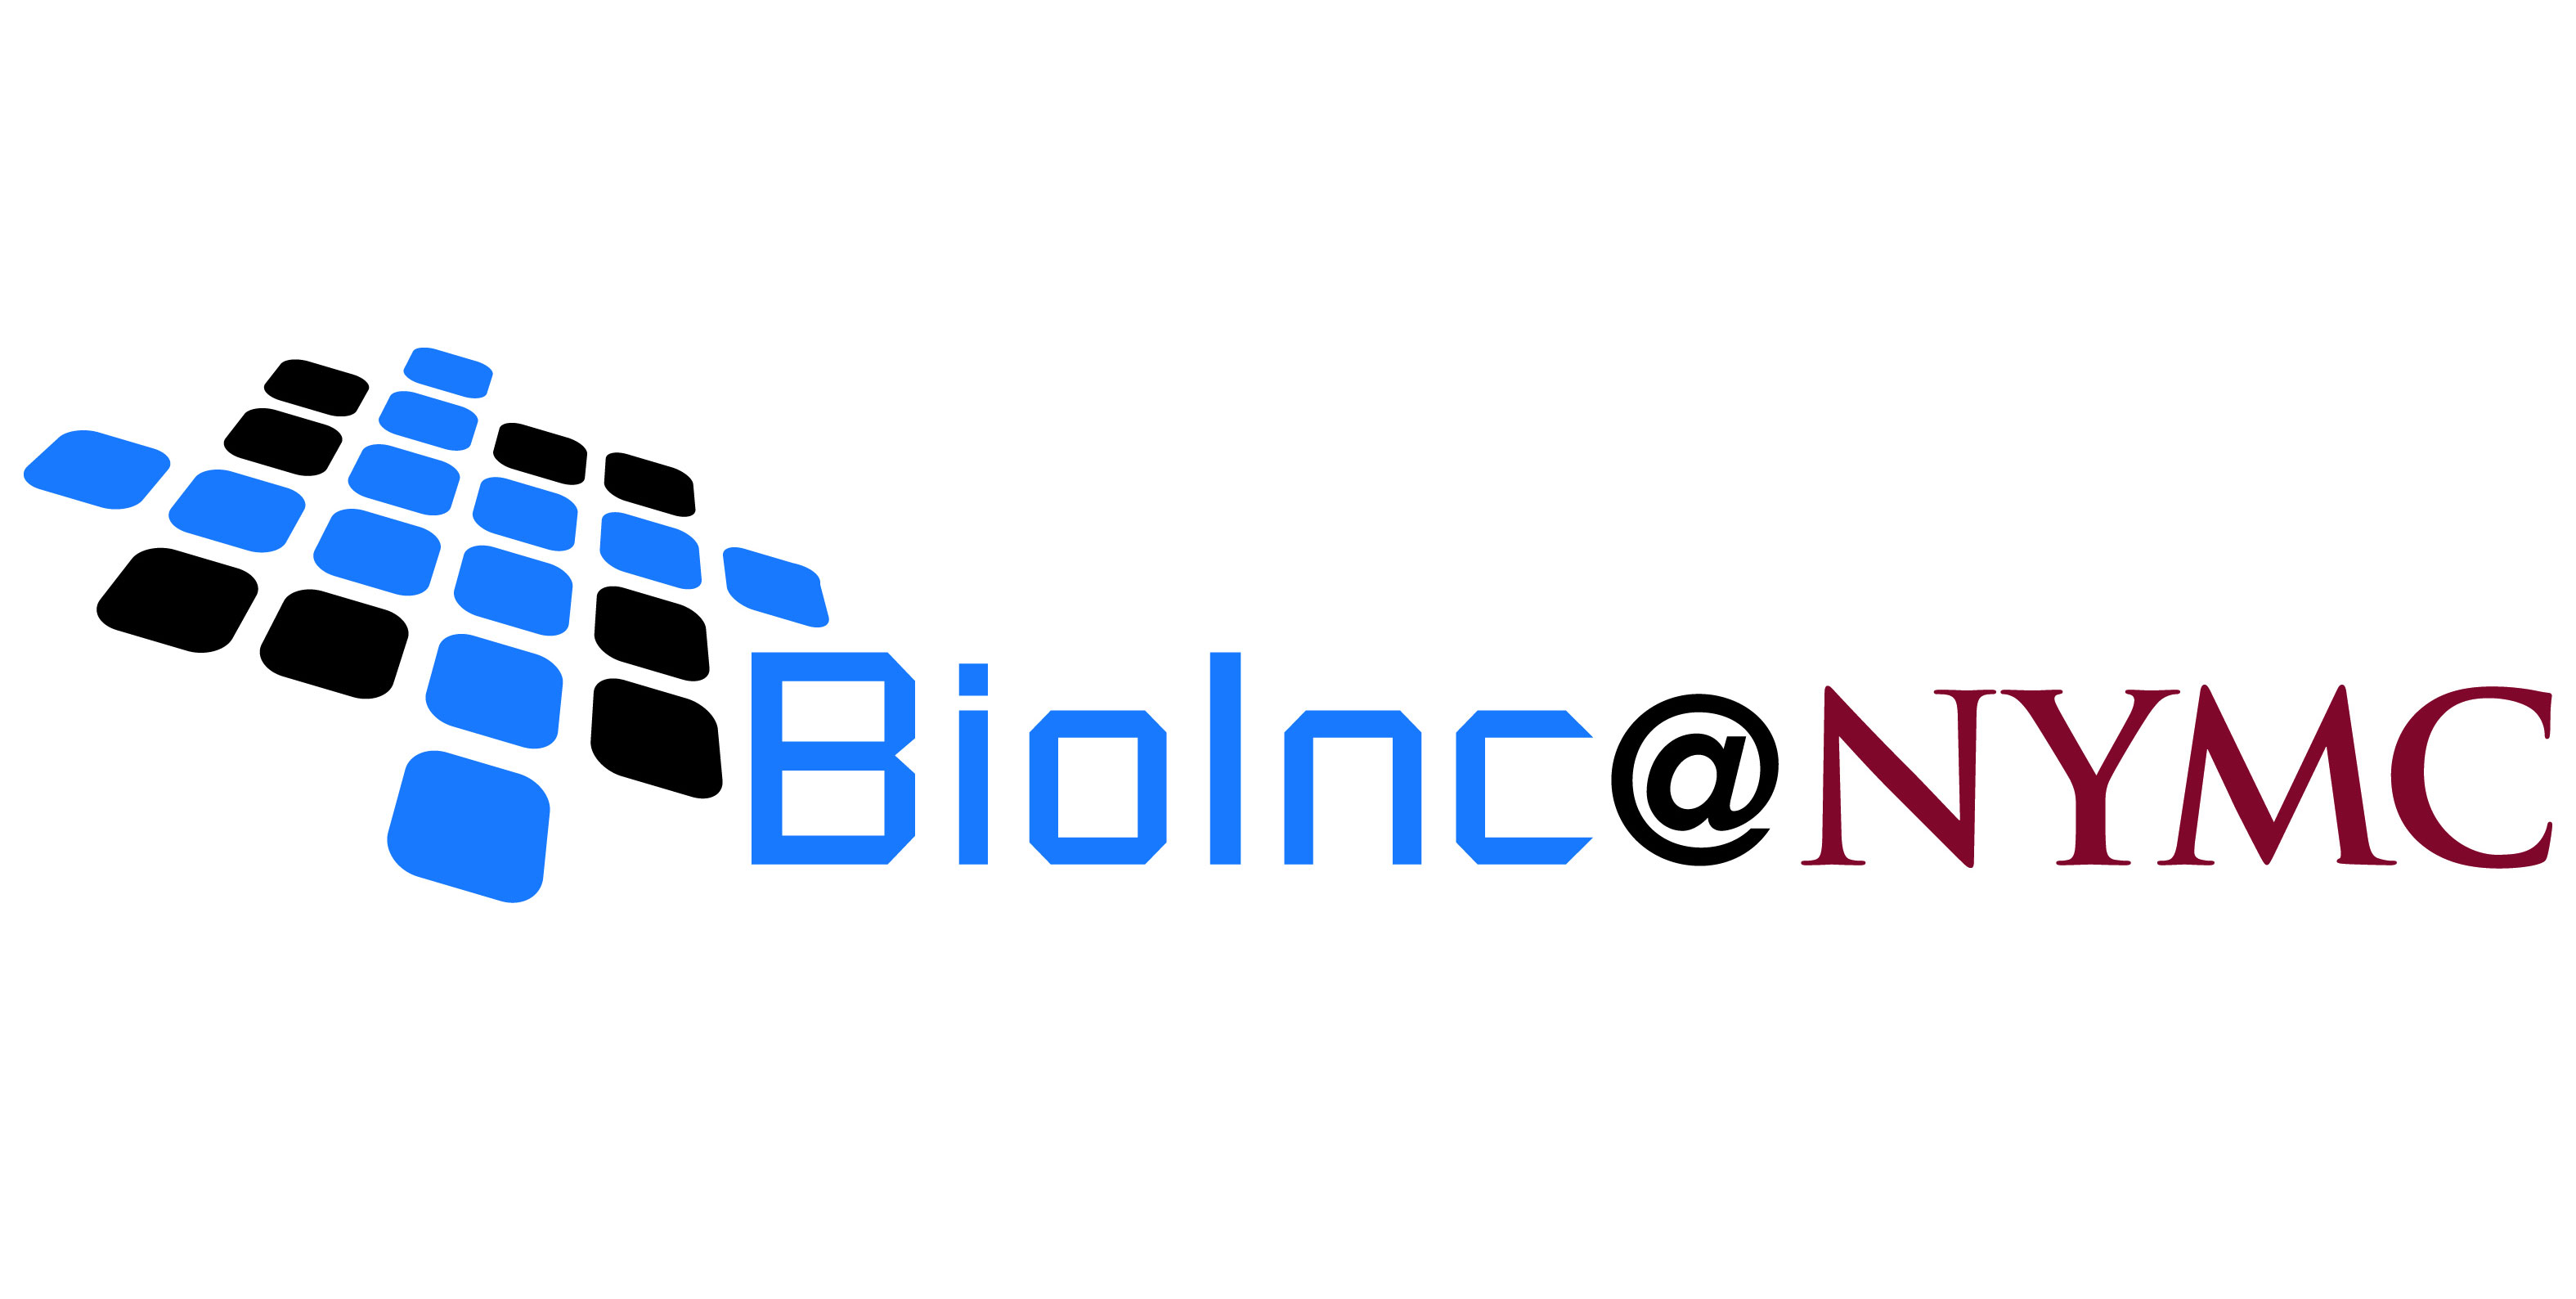 BioInc@NYMC logo